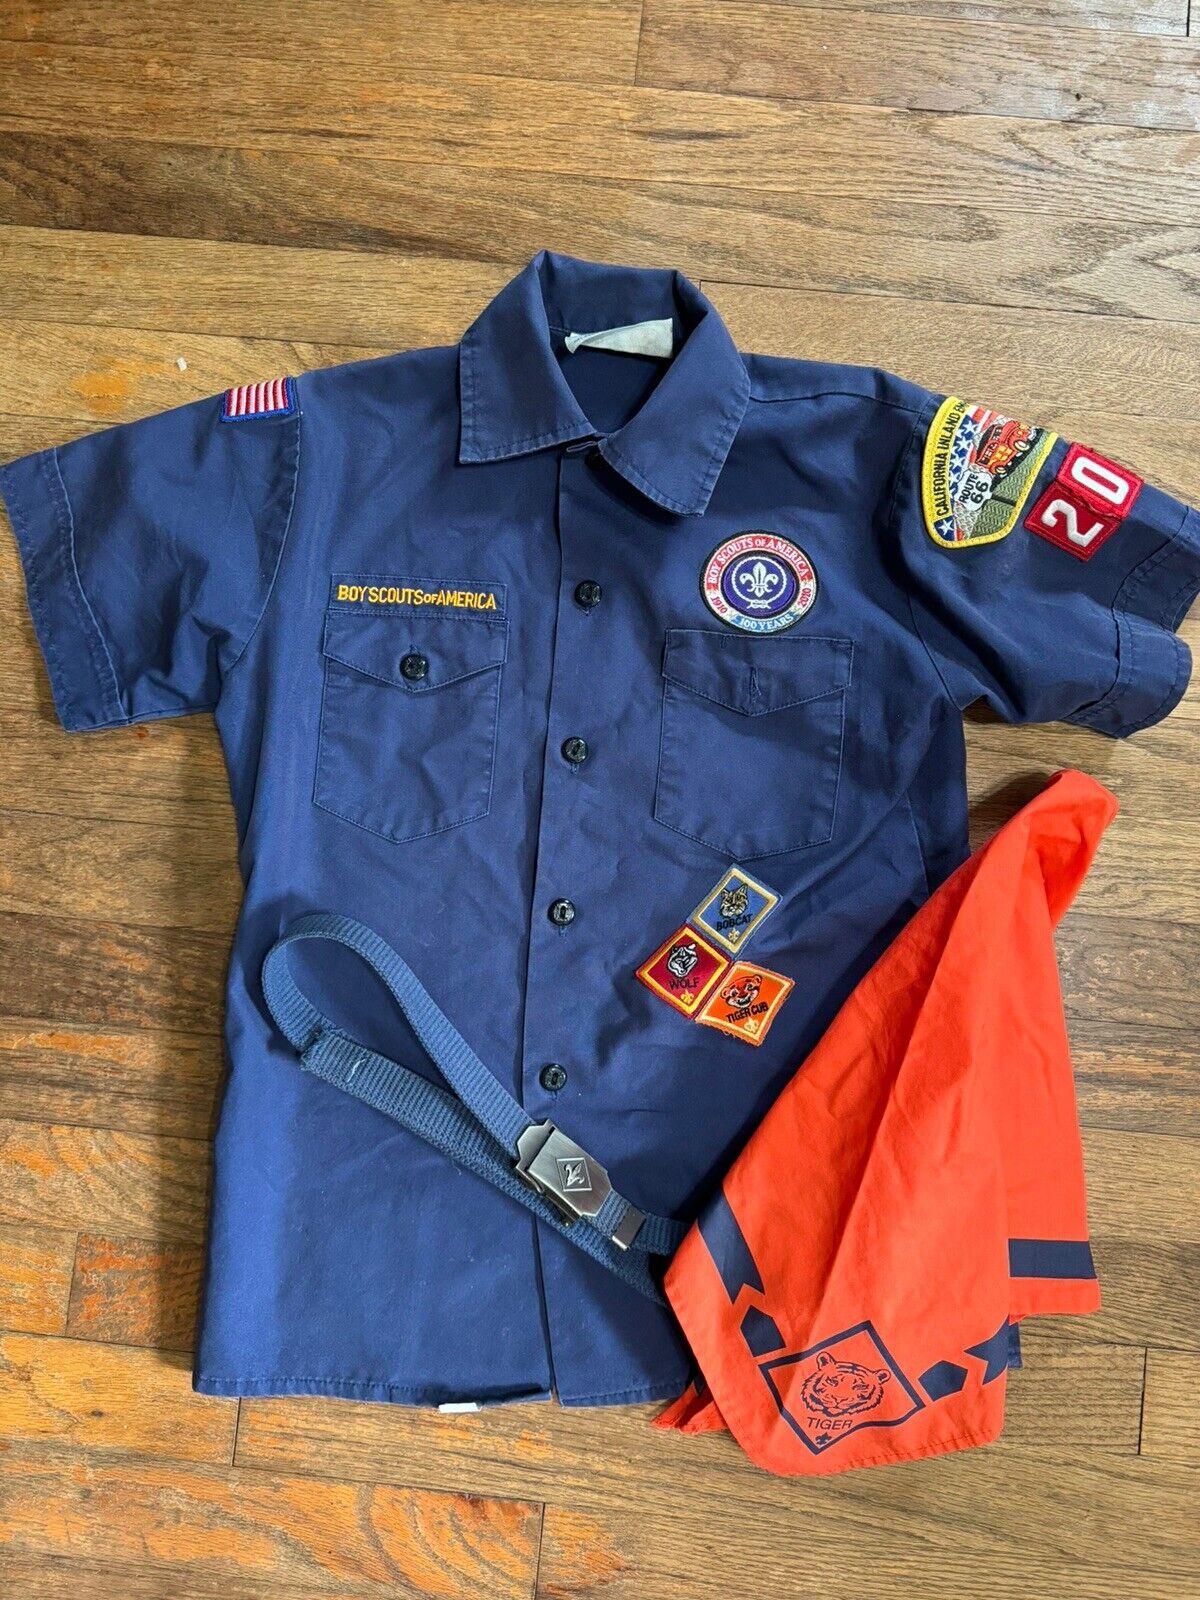 Vintage Boy Scouts Medium Shirt w/Patches Orange Scarf Blue Web Adjstable Belt